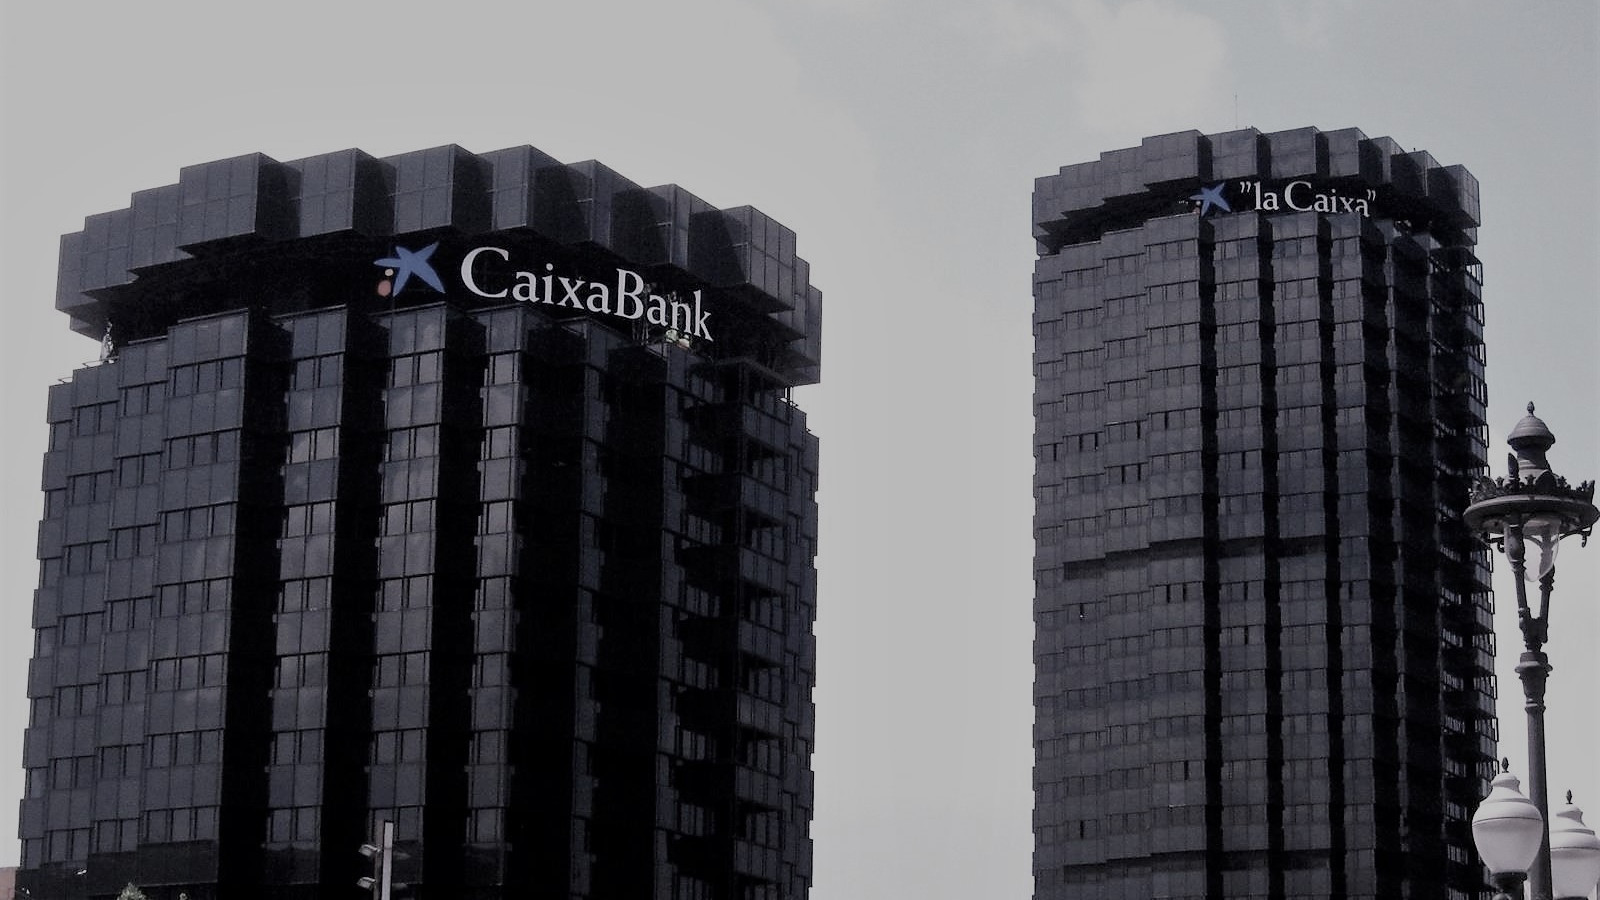 La historia de las tprres negras de CaixaBank